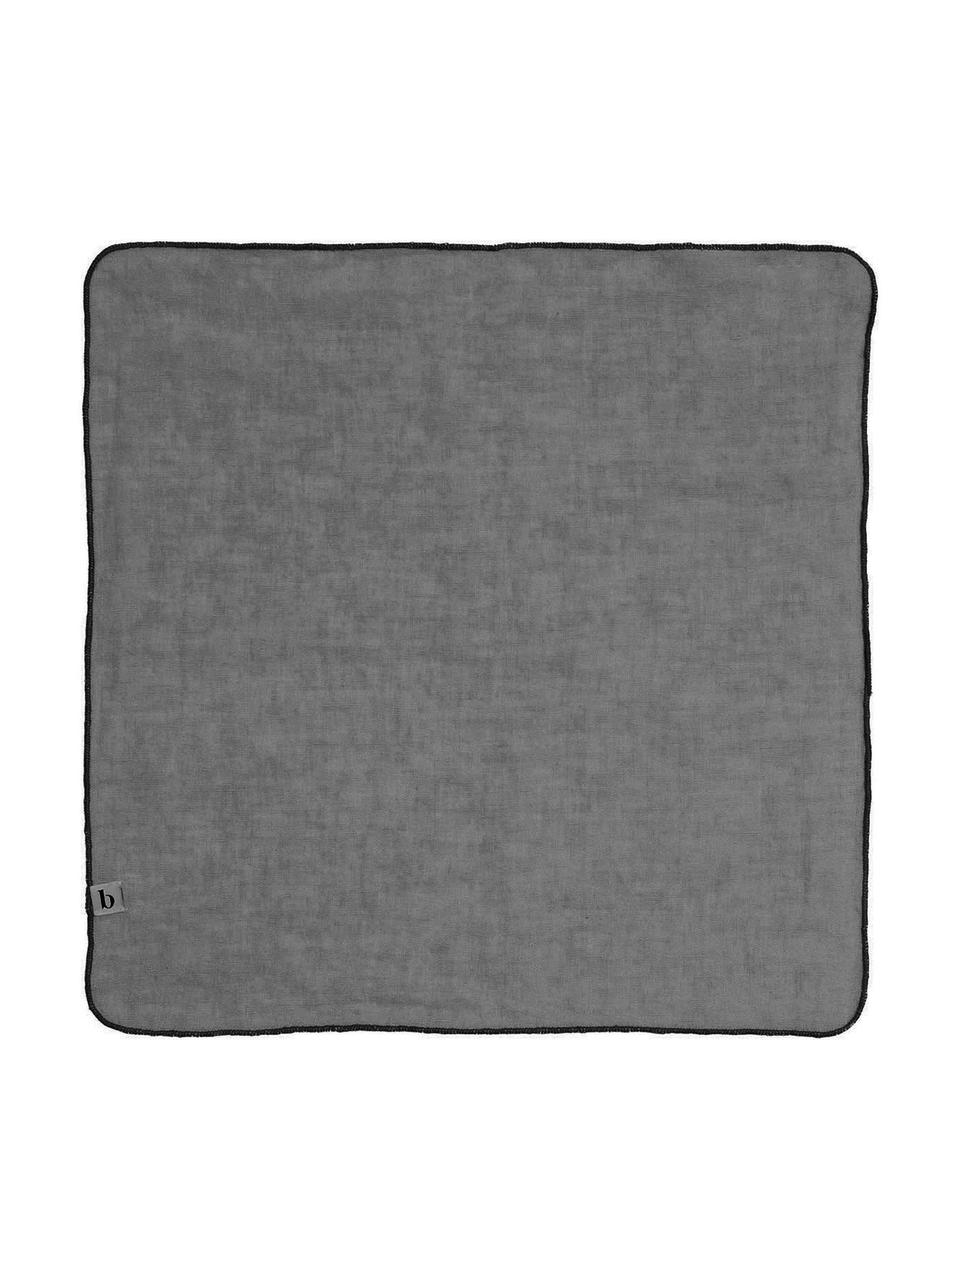 Leinen-Servietten Gracie in Grau, 2 Stück, 100% Leinen, Grau, B 45 x L 45 cm